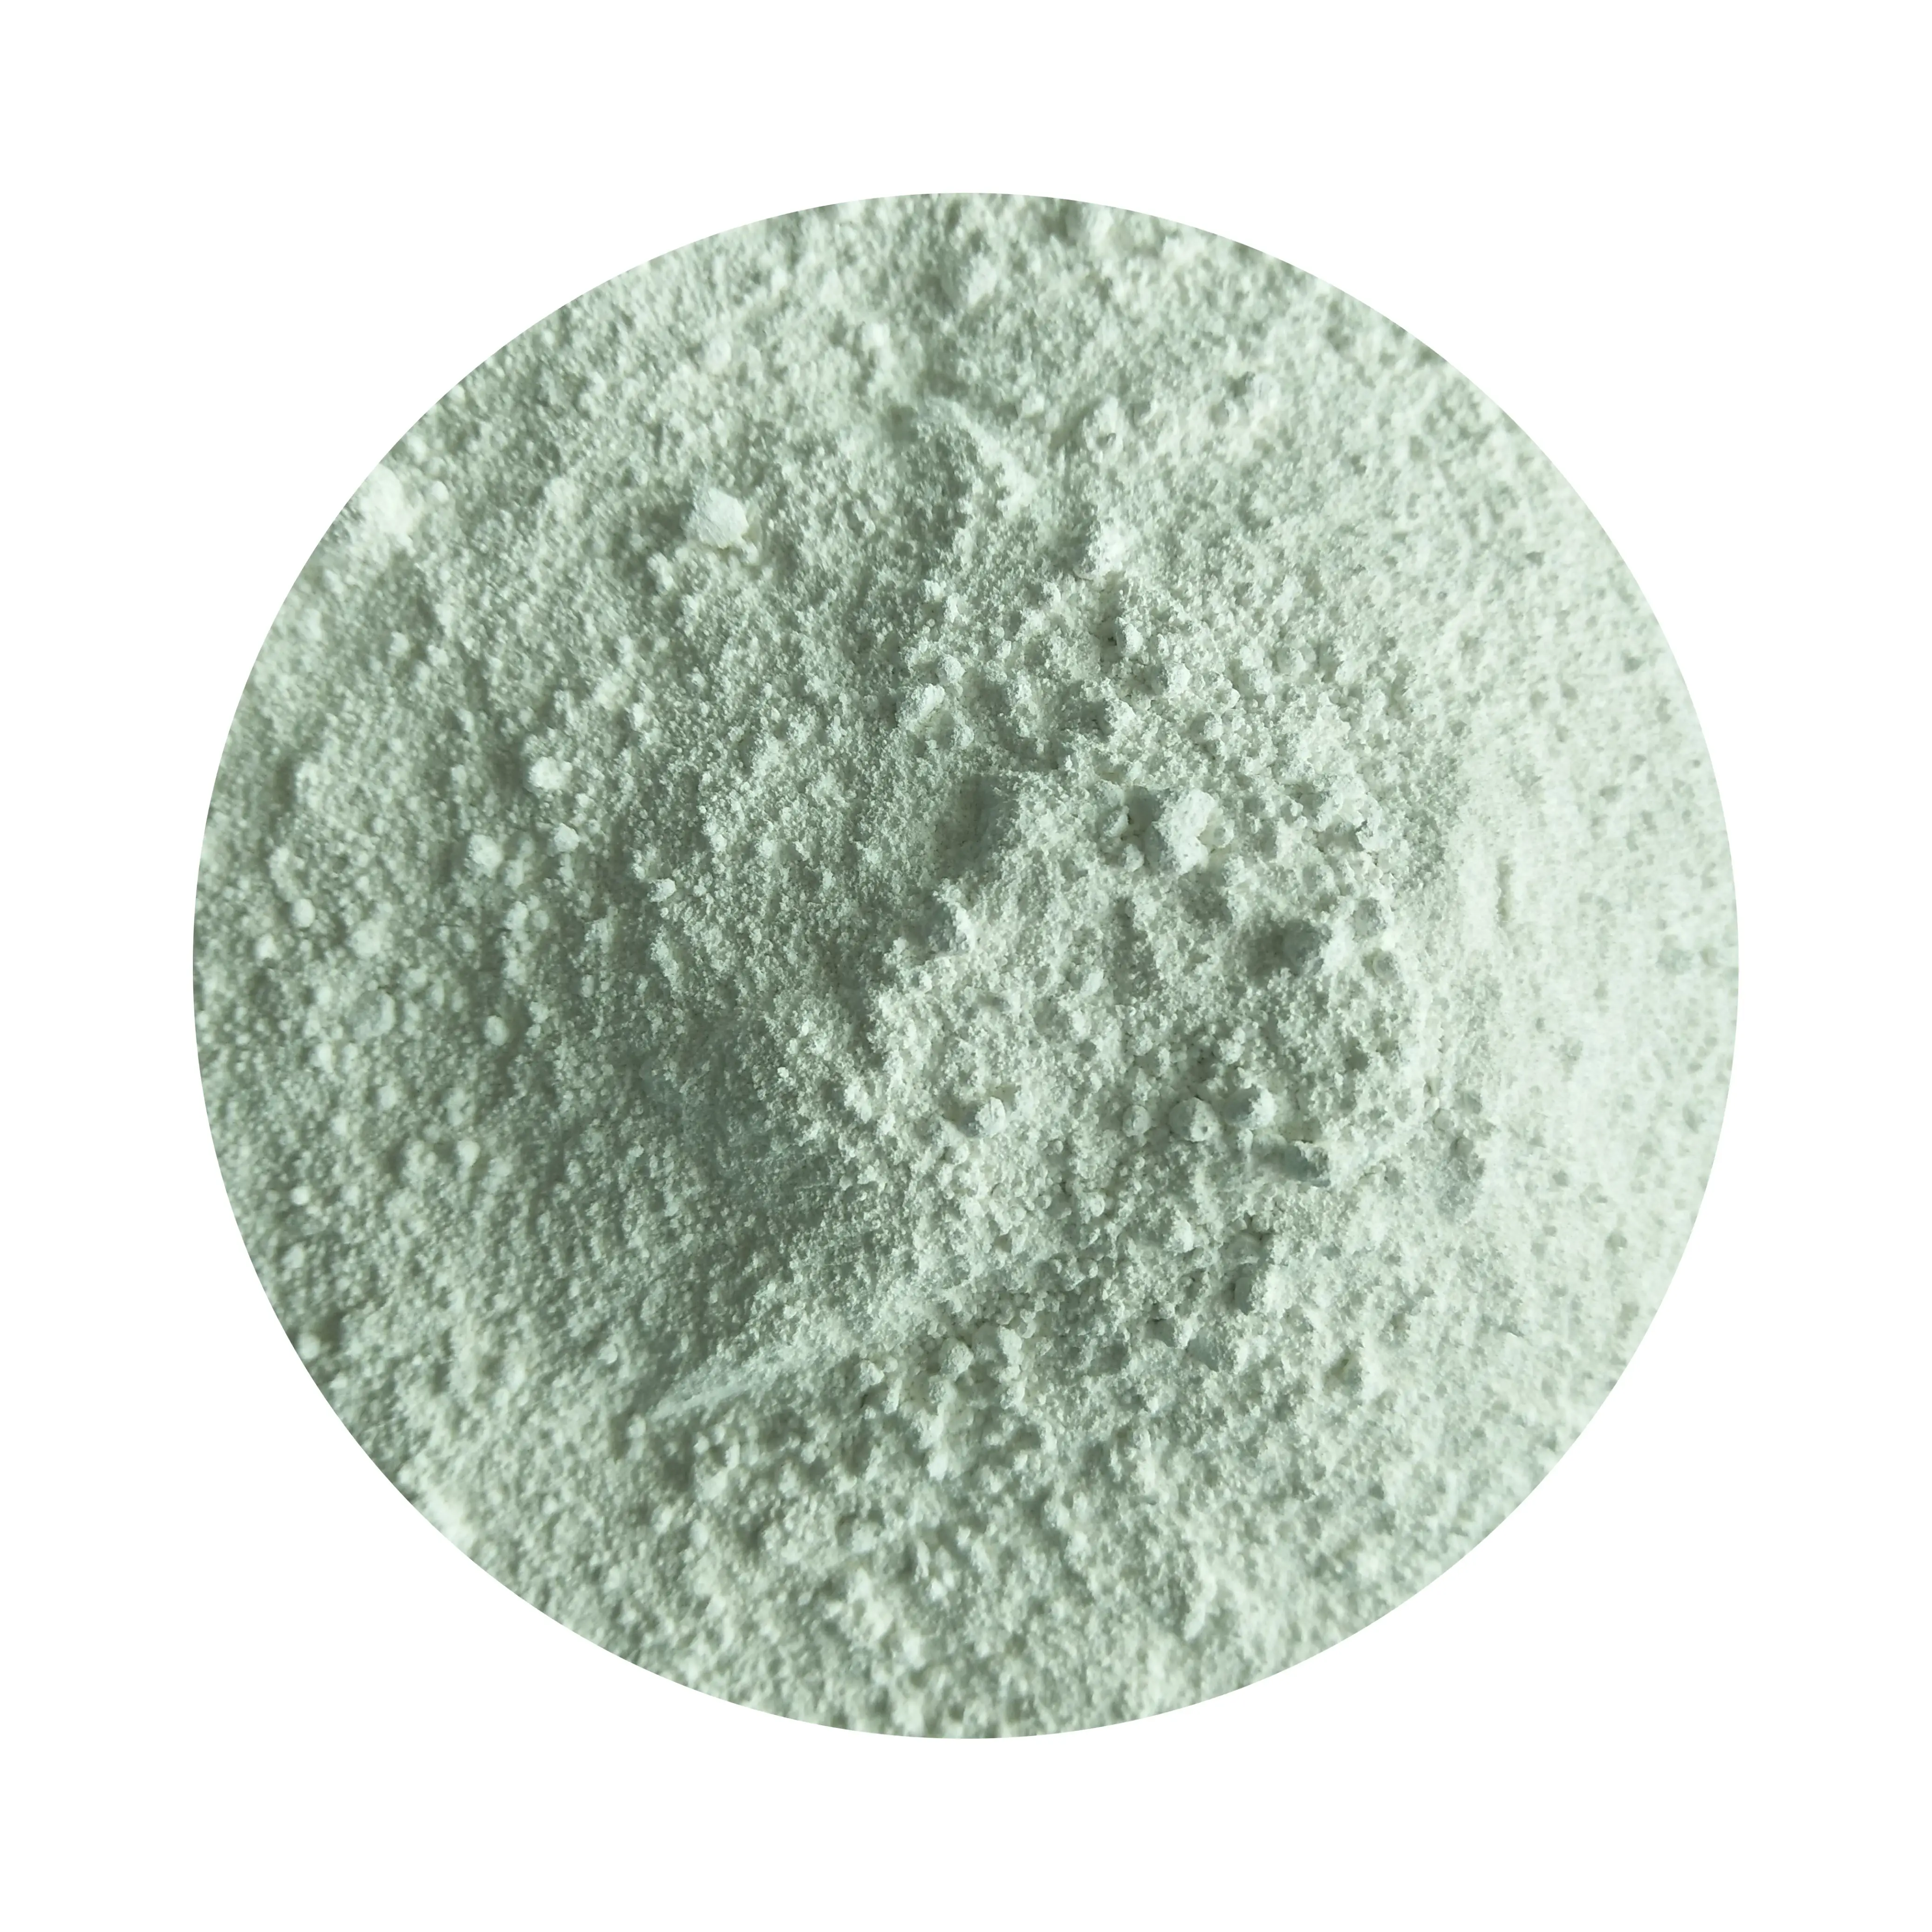 Compre precio de fabricación china de Polvo de pigmento Tio2 de dióxido de titanio de grado rutilo anatasa para tintas blancas pasta de Filtro de pintura